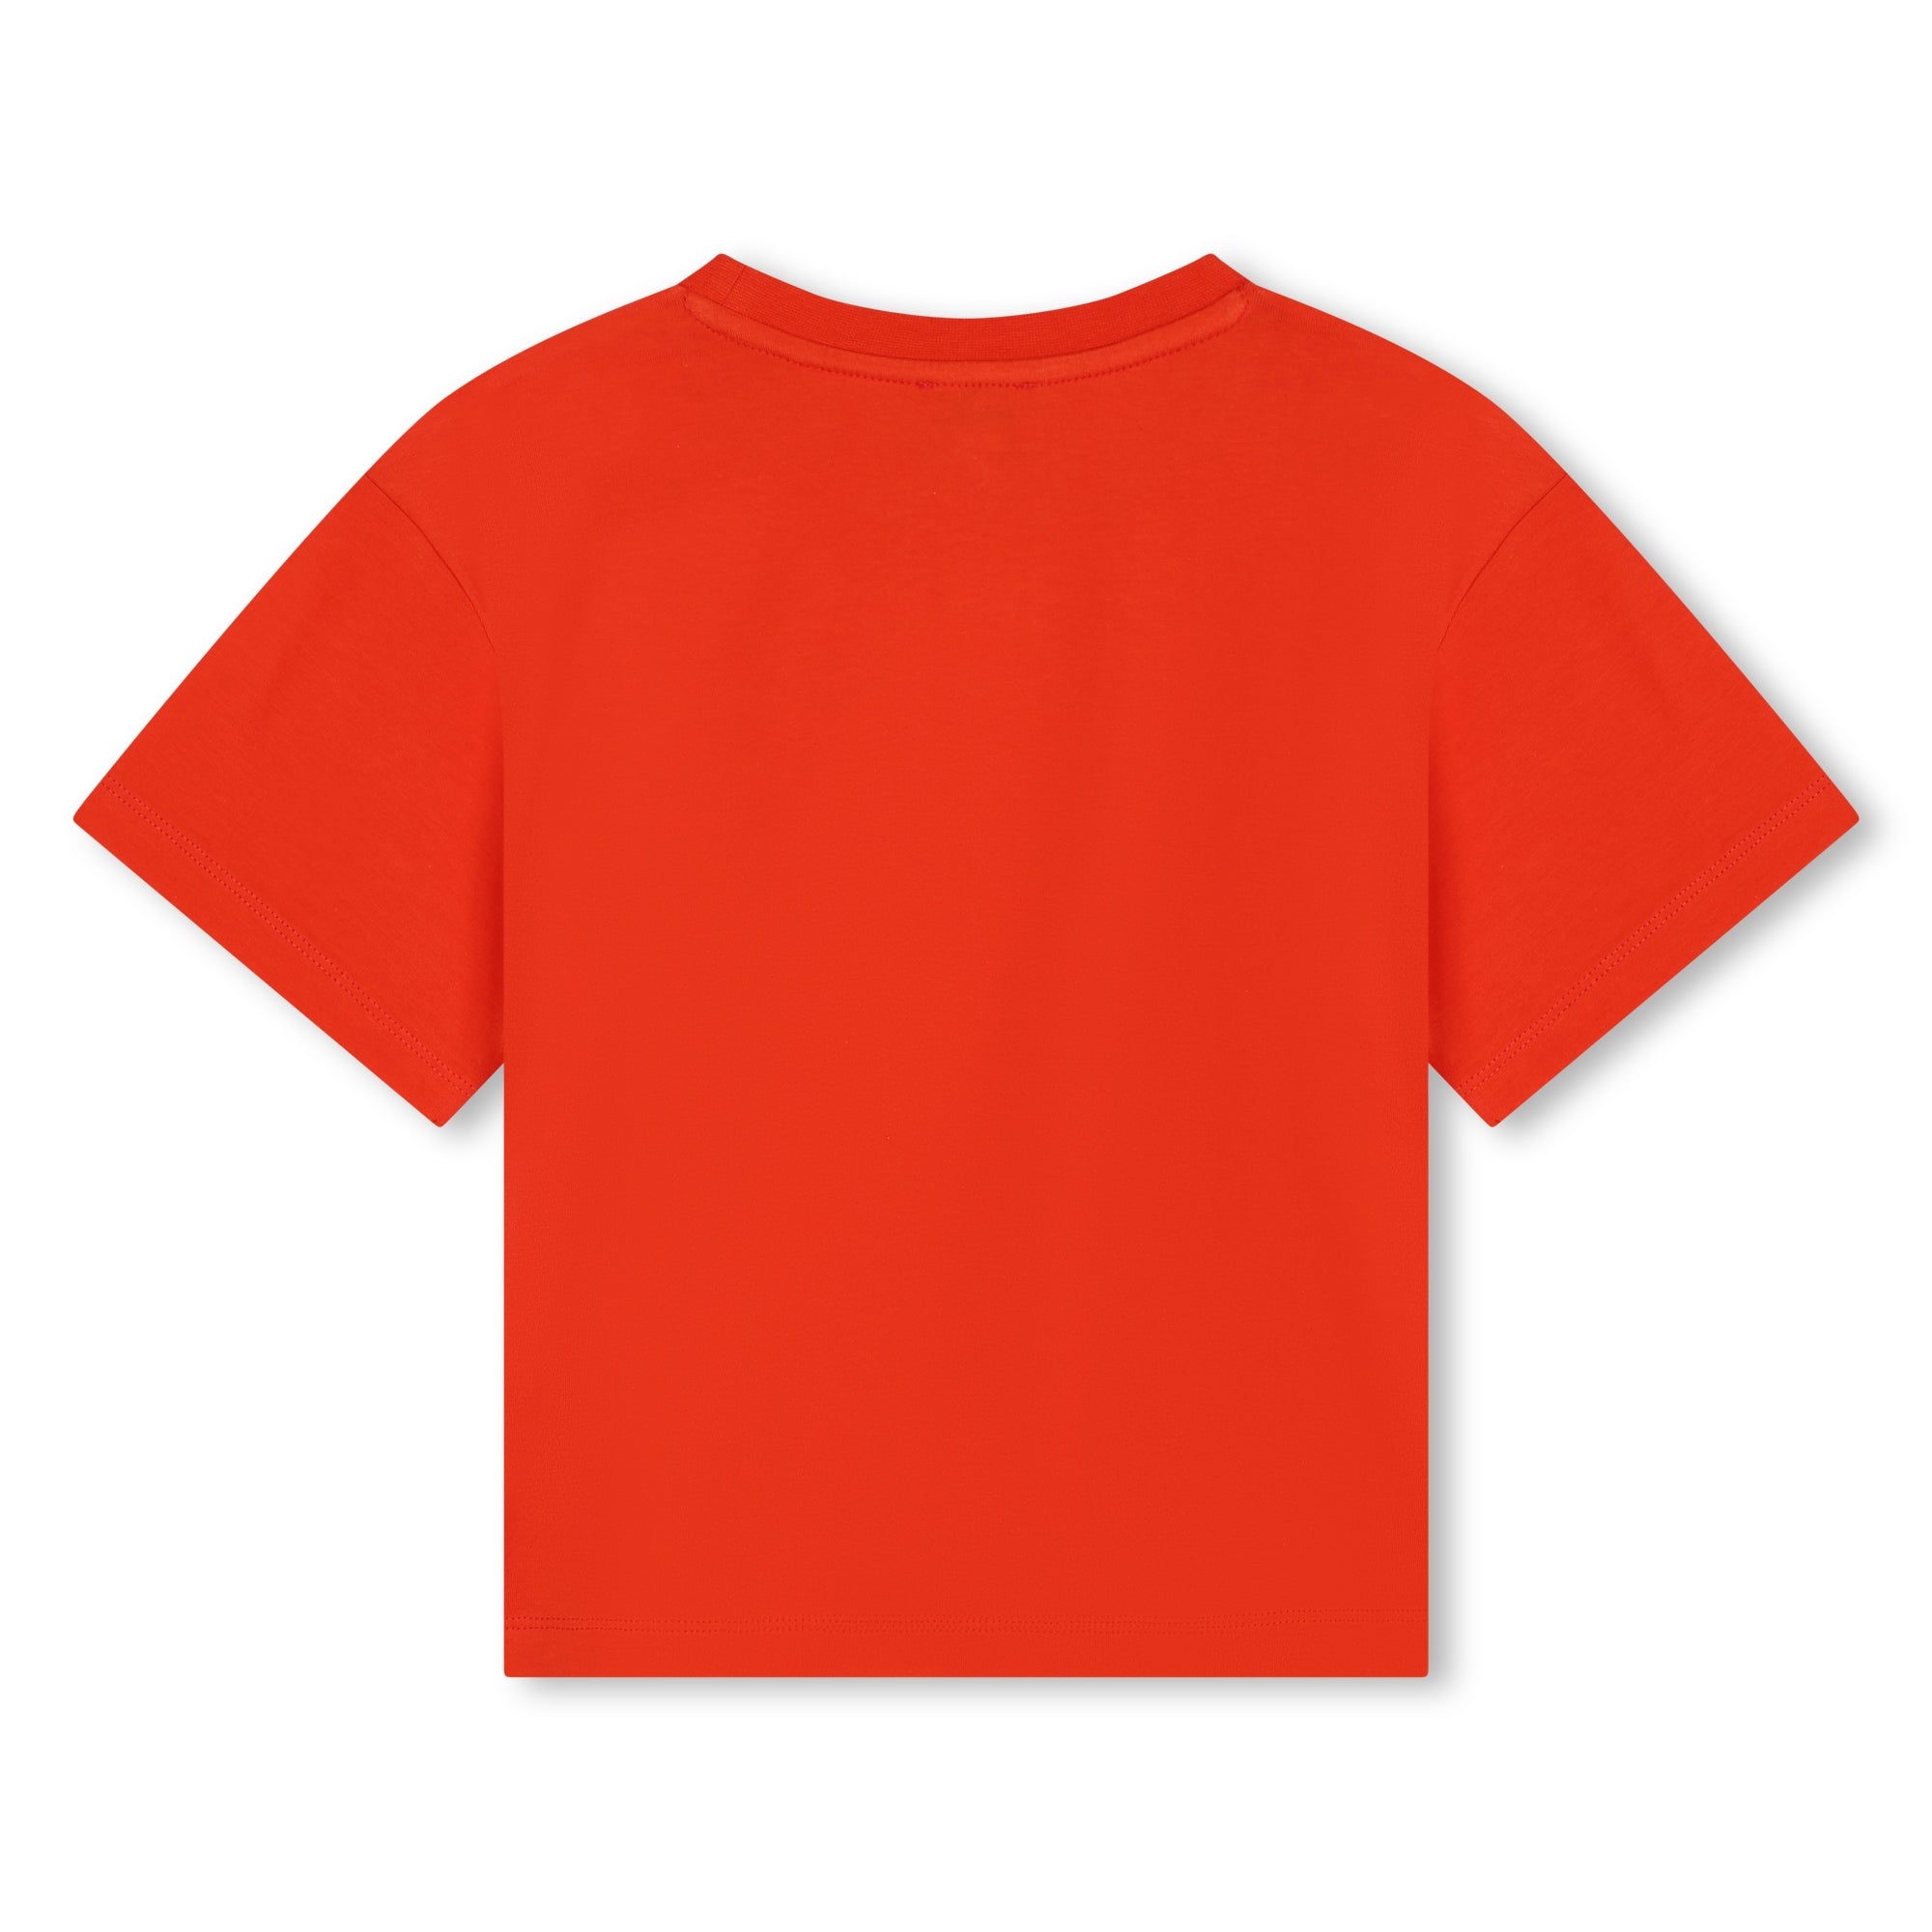 Kenzo Kids Boke-flower cotton T-shirt - Orange